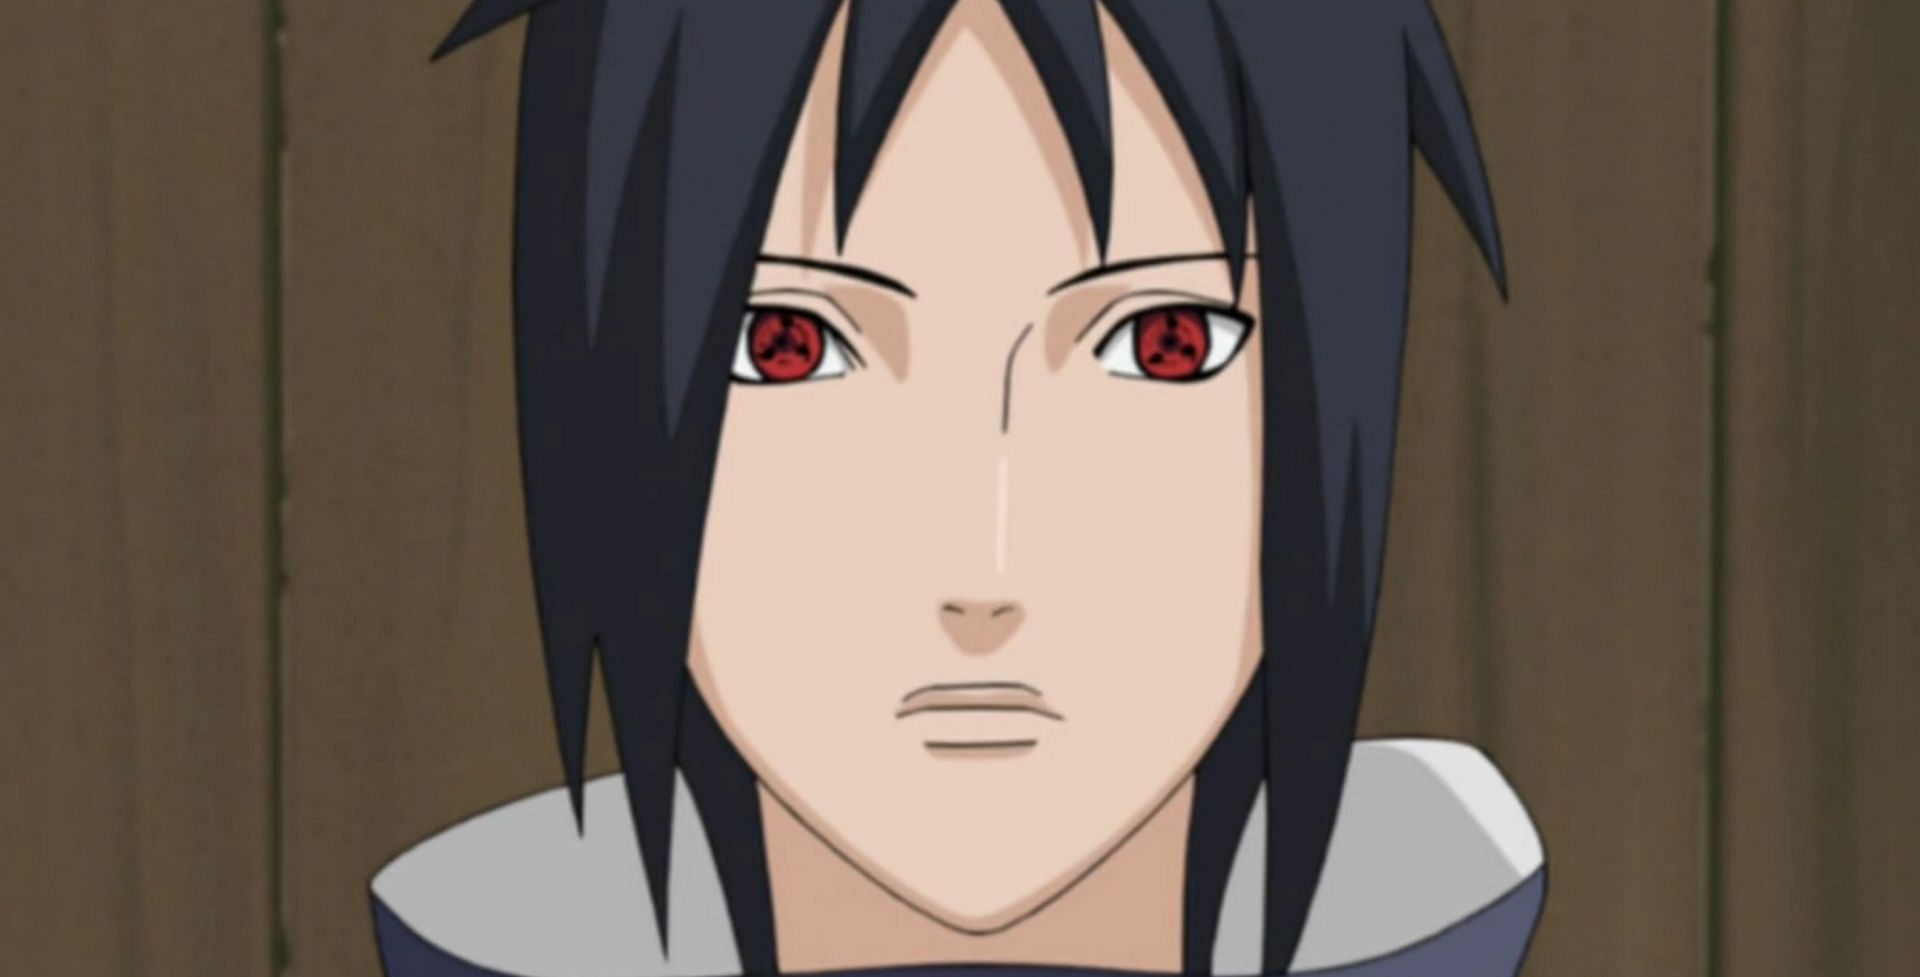 Izuna Uchiha as seen in the anime Naruto (Image via Studio Pierrot)